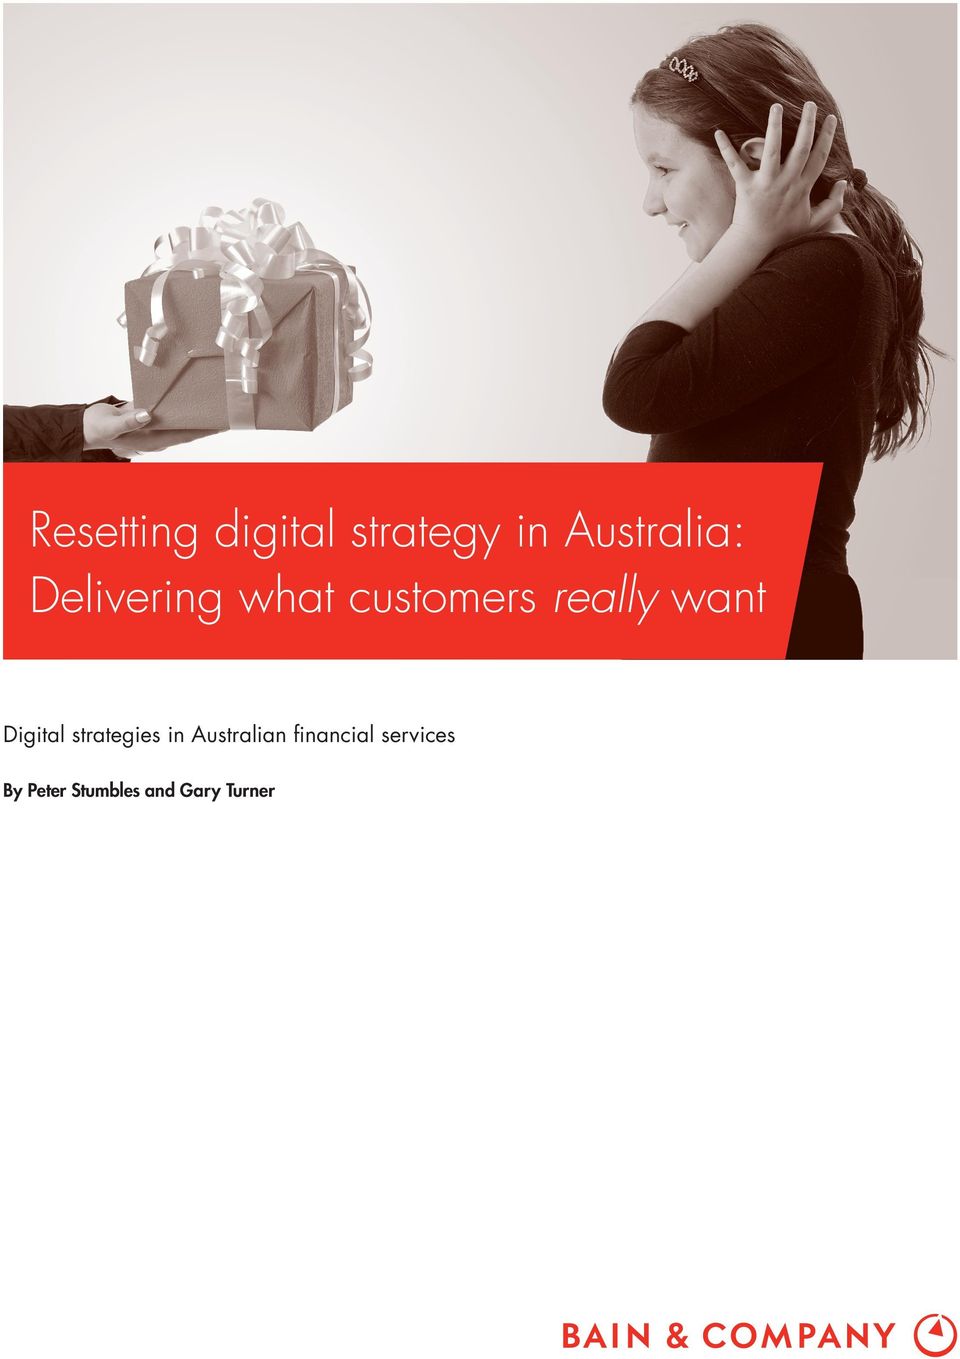 Digital strategies in Australian